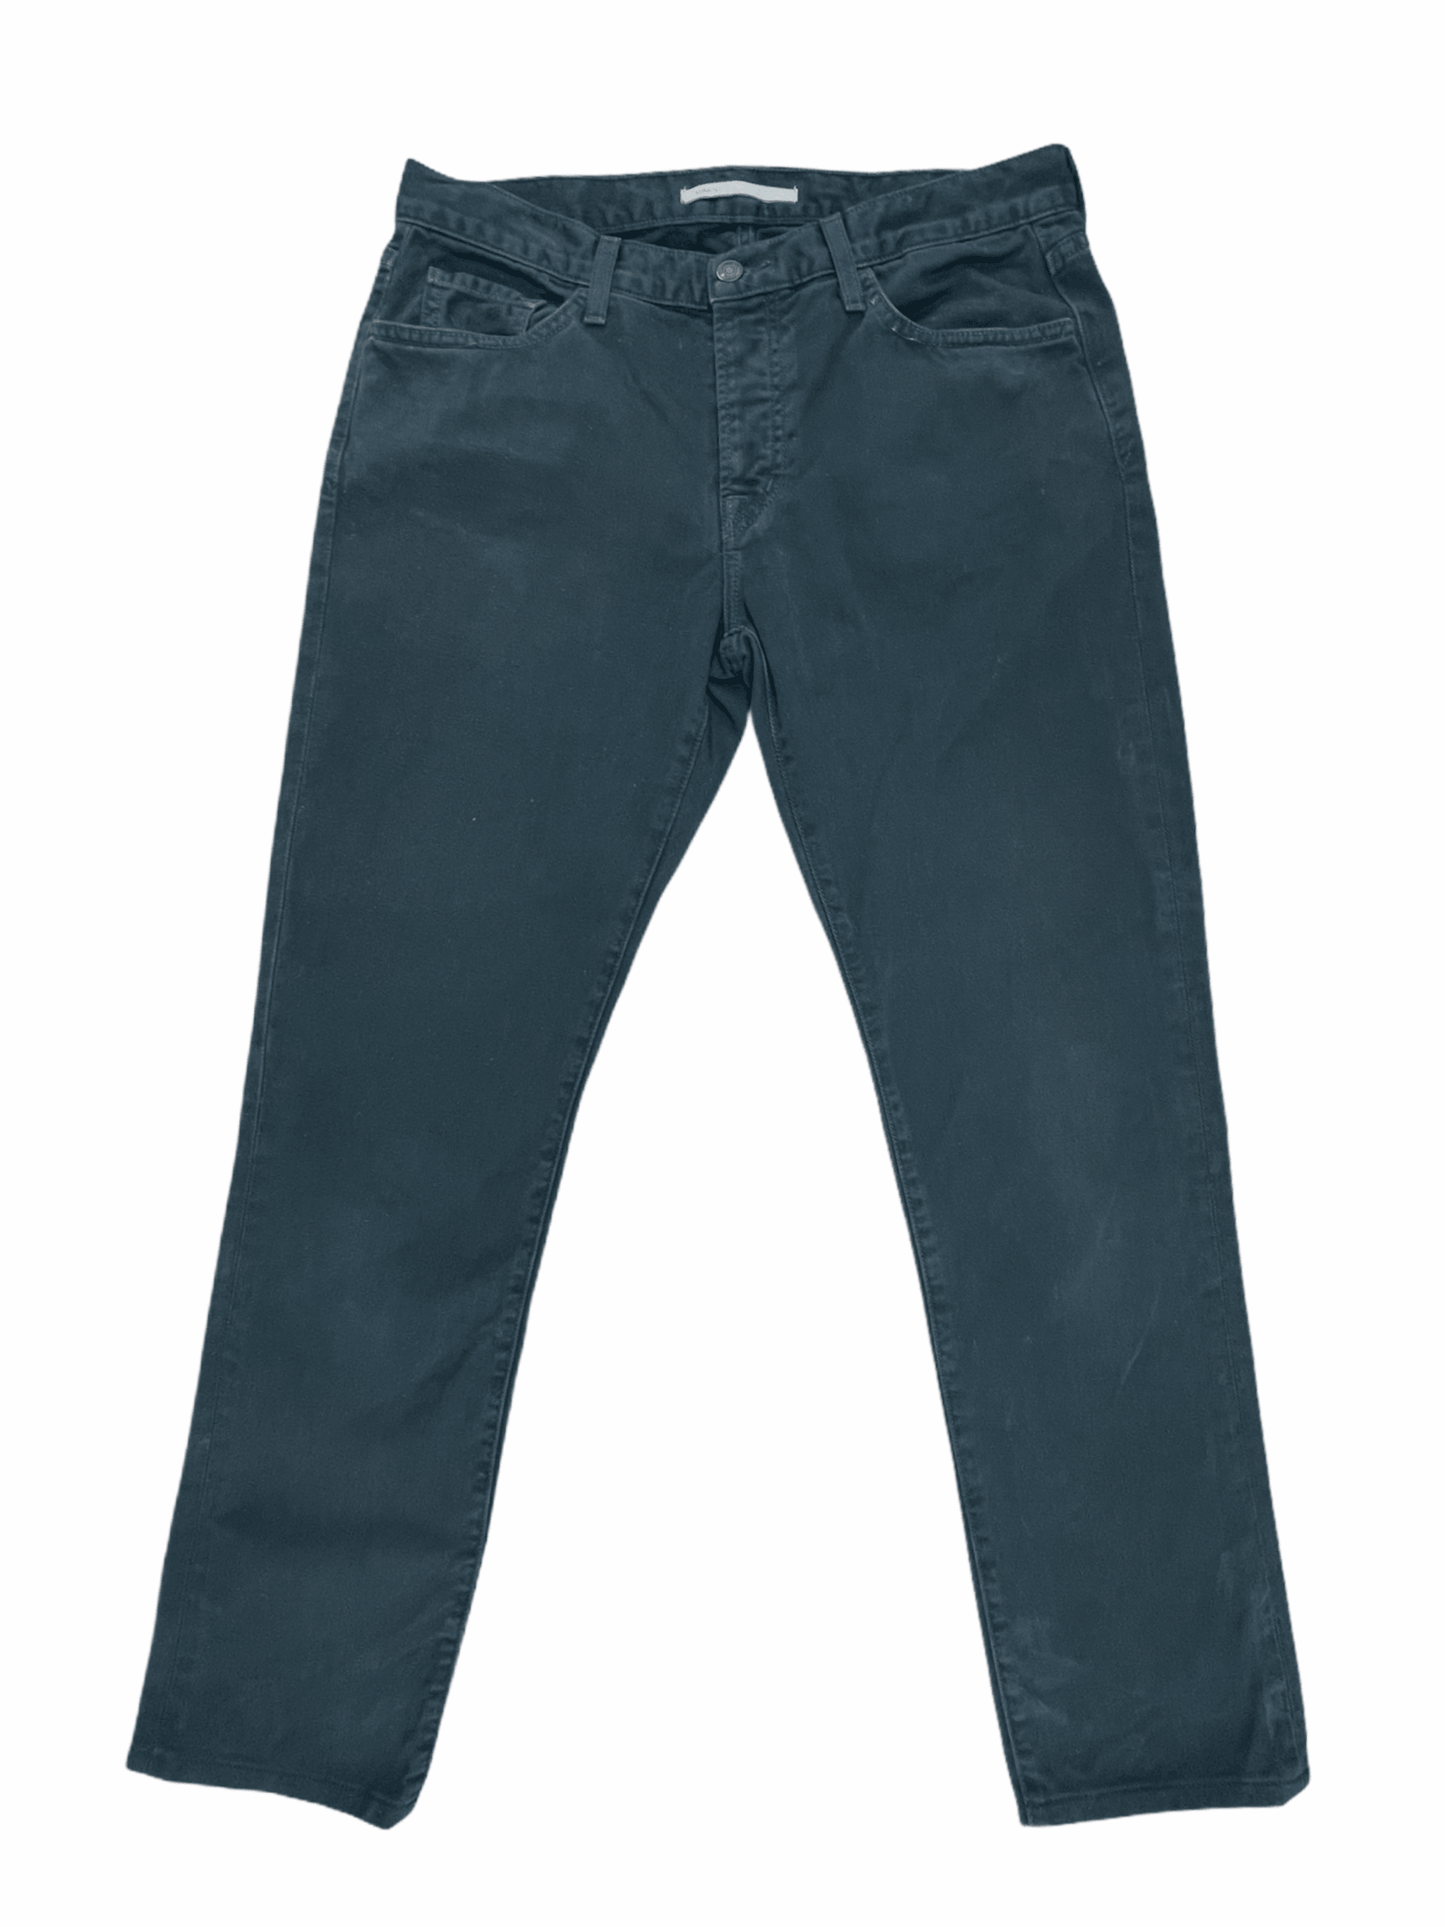 Vince Dark Green Denim Jeans 33x30 Medium—Genuine Design luxury consignment